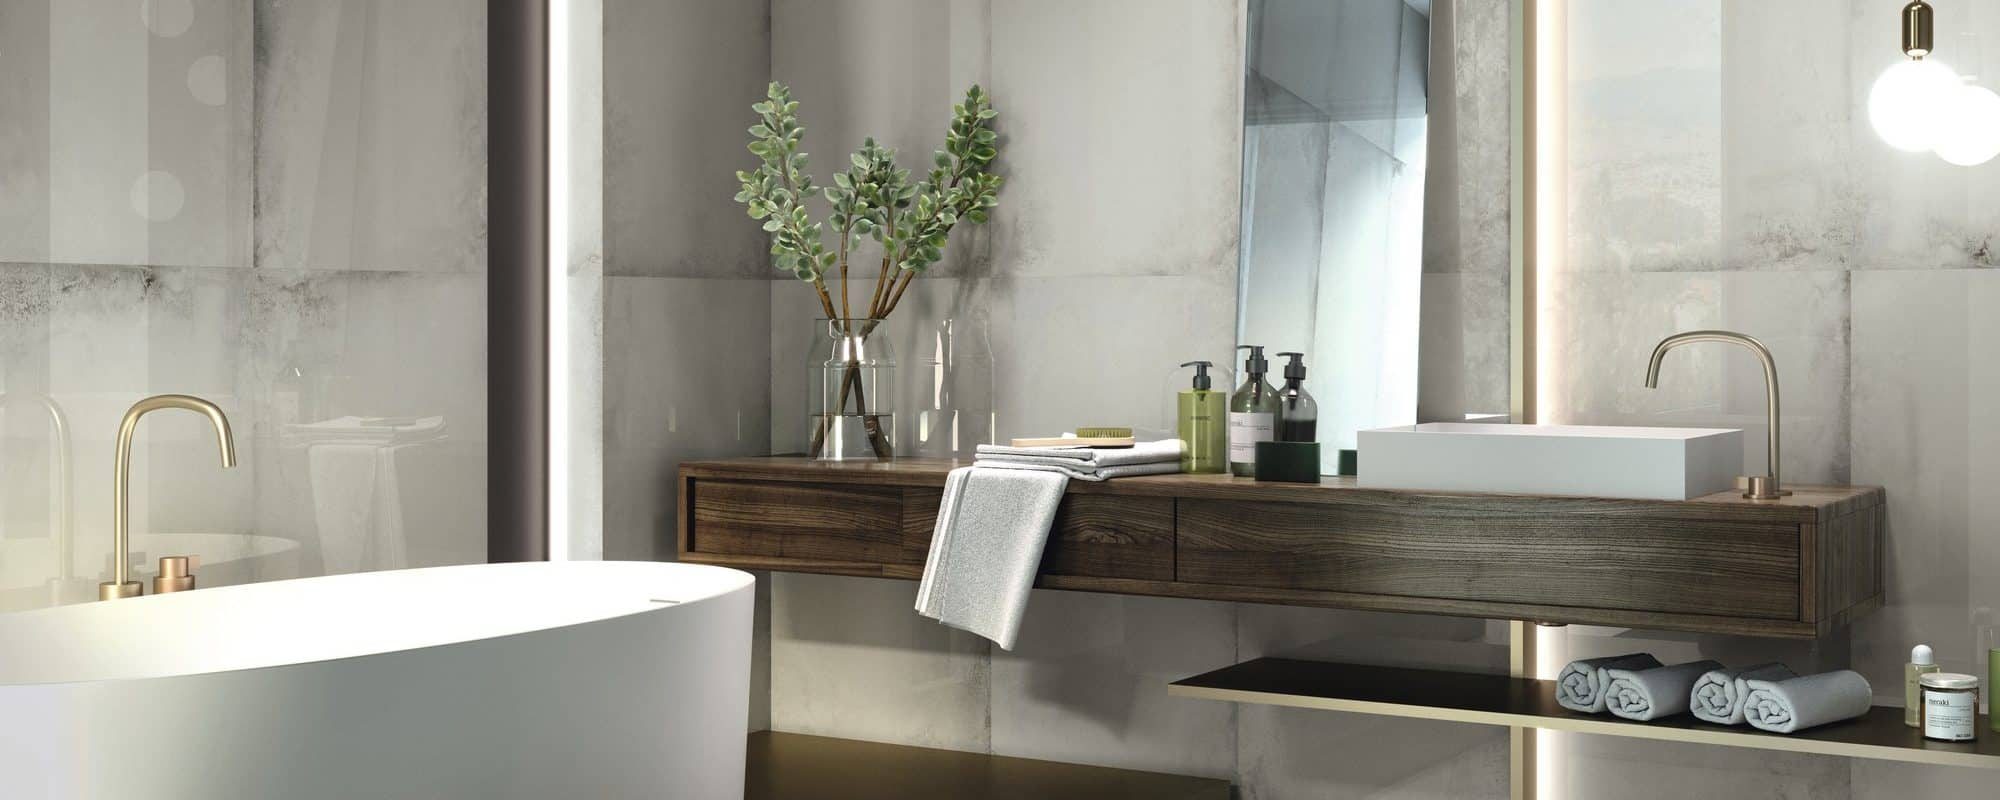 NAXOS cement effect porcelain bathroom tiles uk slider 5